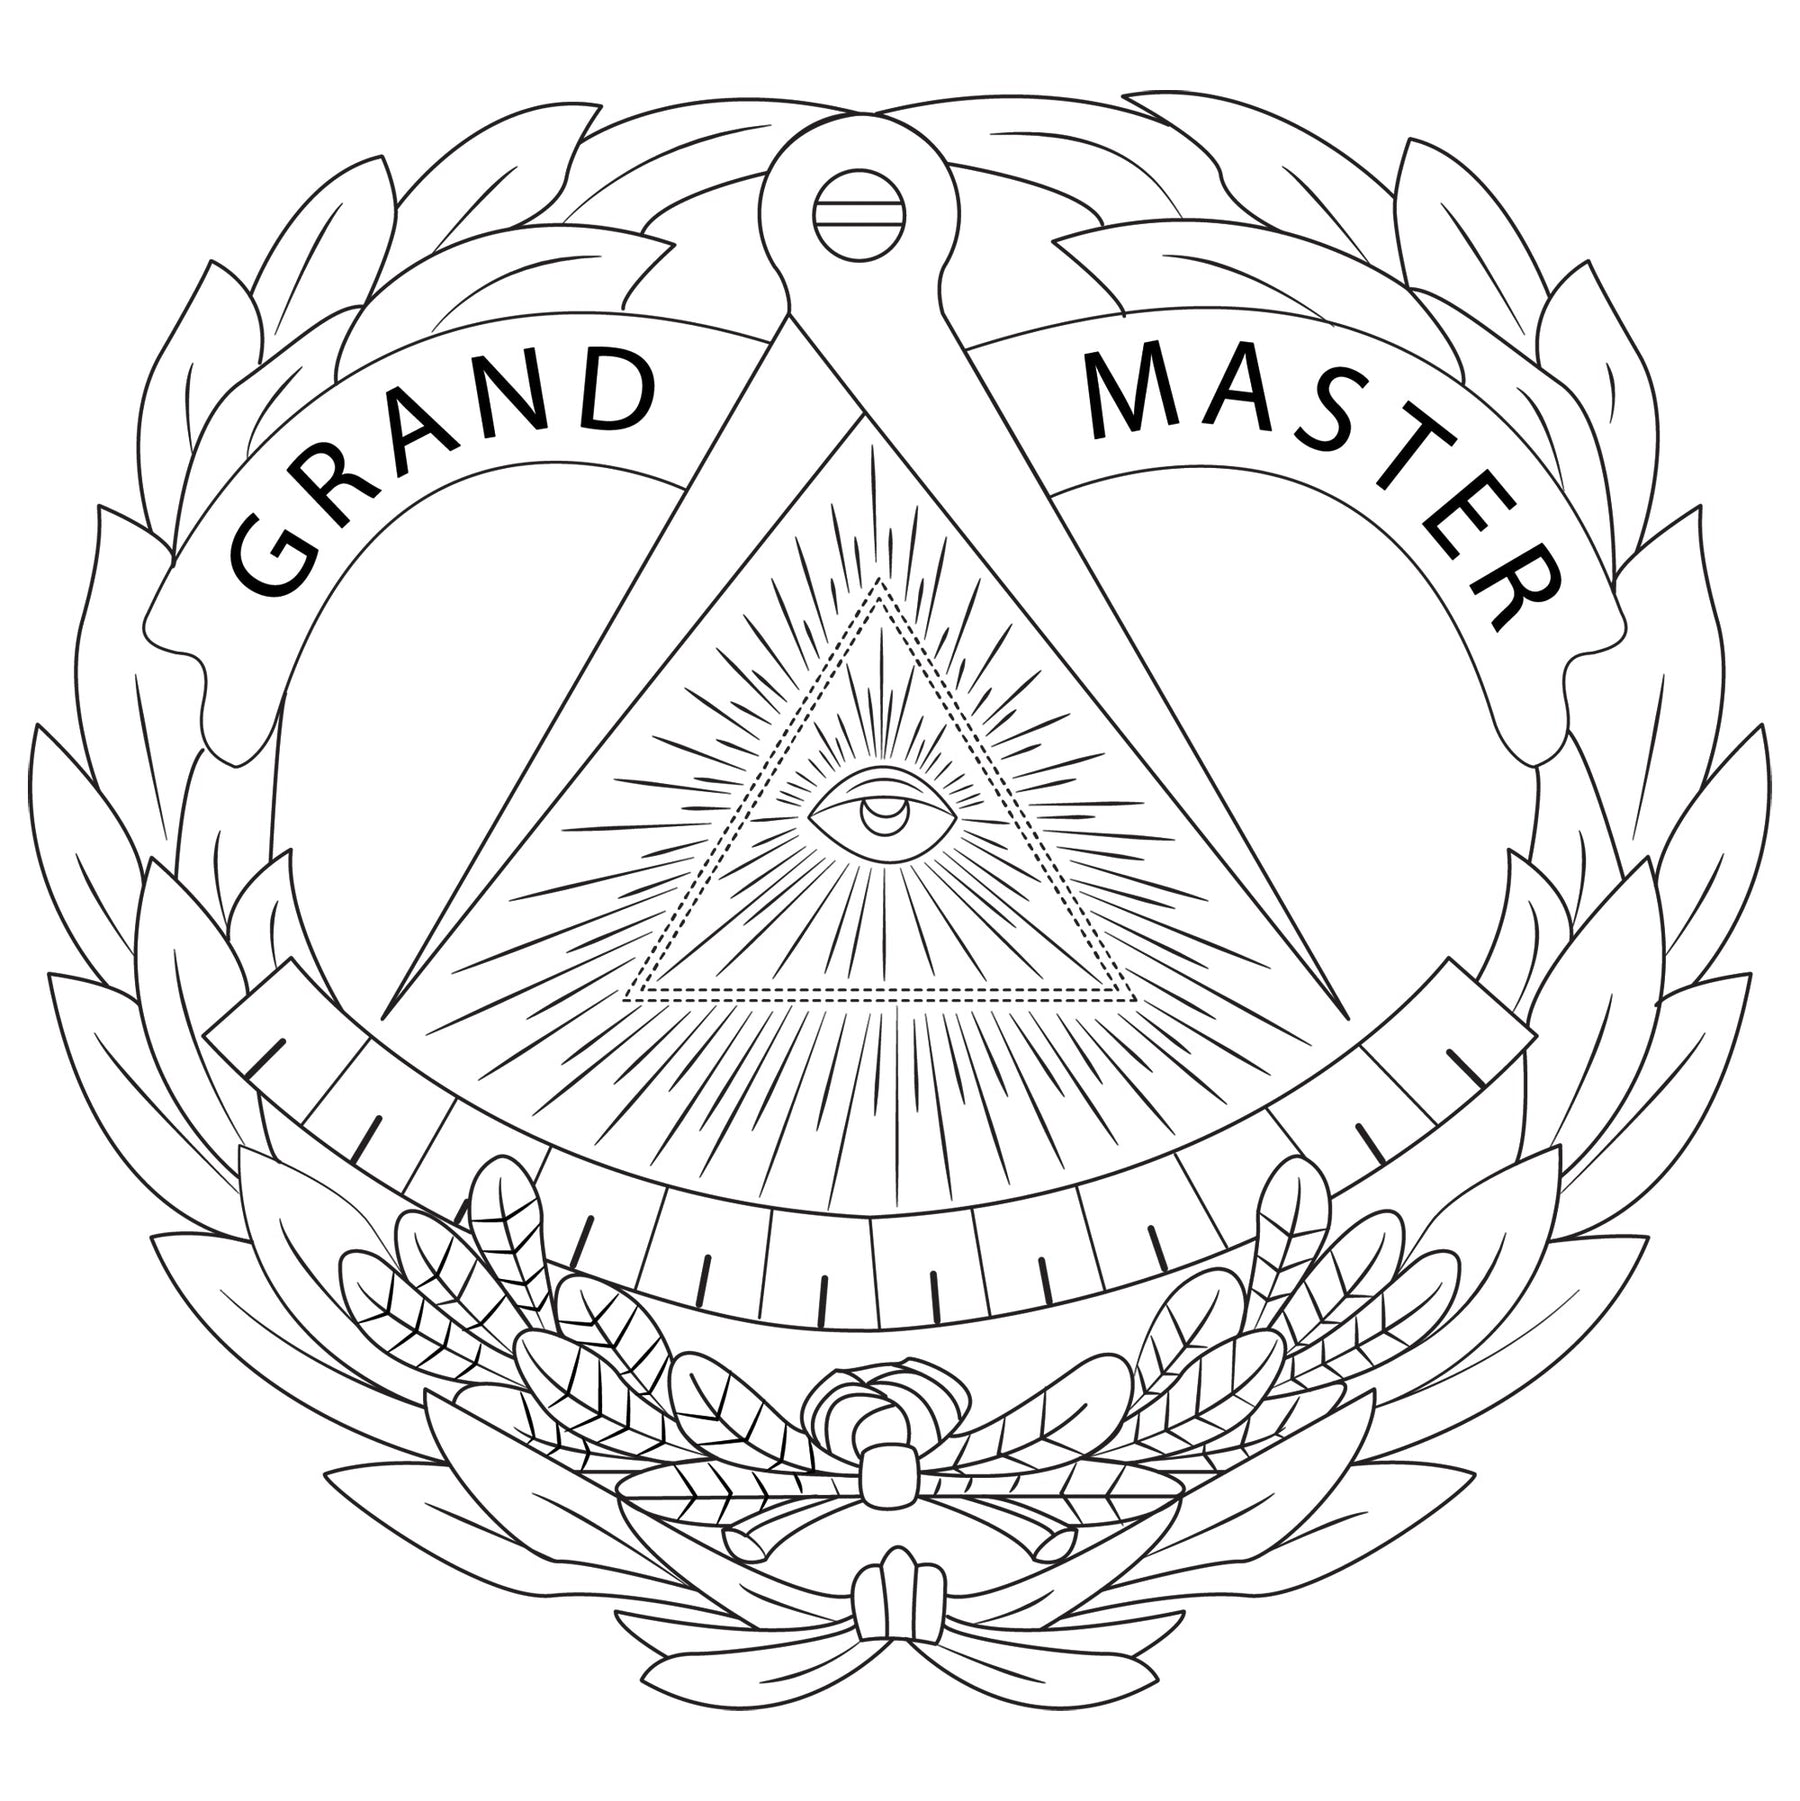 Grand Master Blue Lodge Chess Set - Marble Pattern on Wood - Bricks Masons